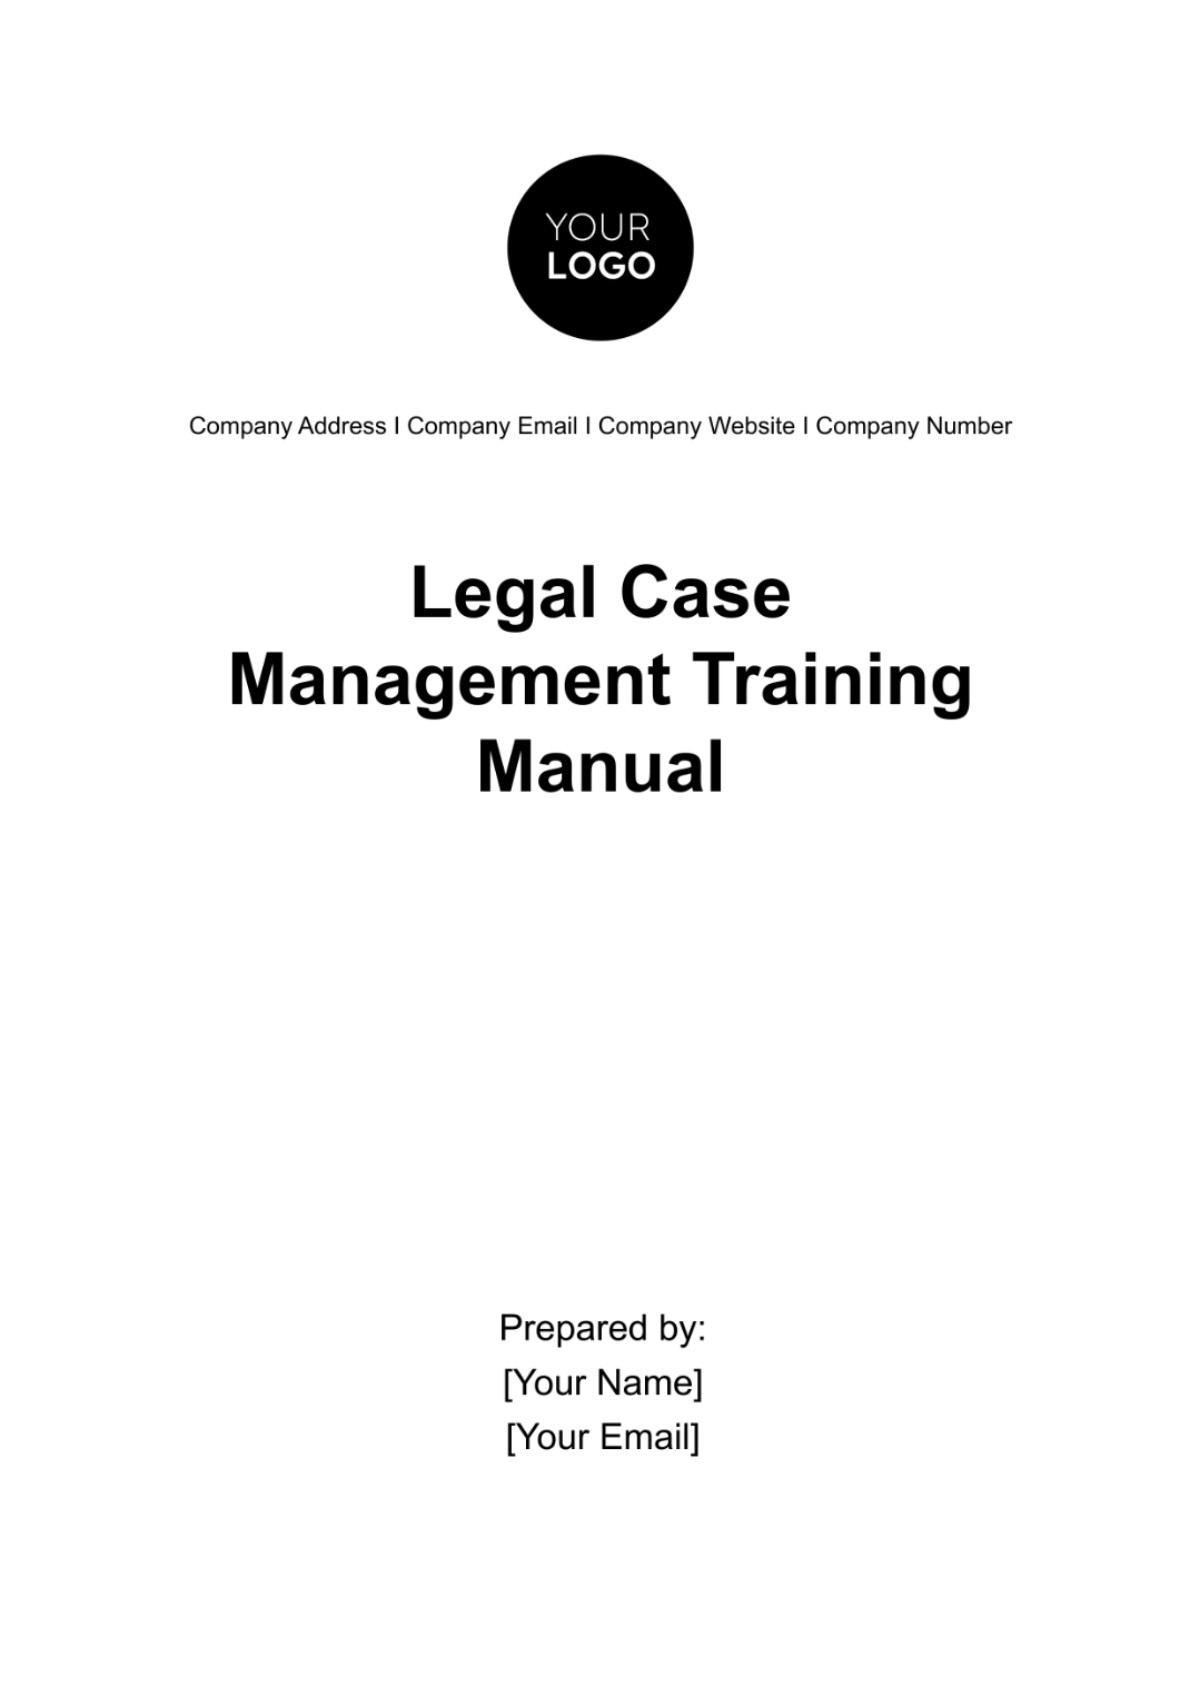 Legal Case Management Training Manual Template